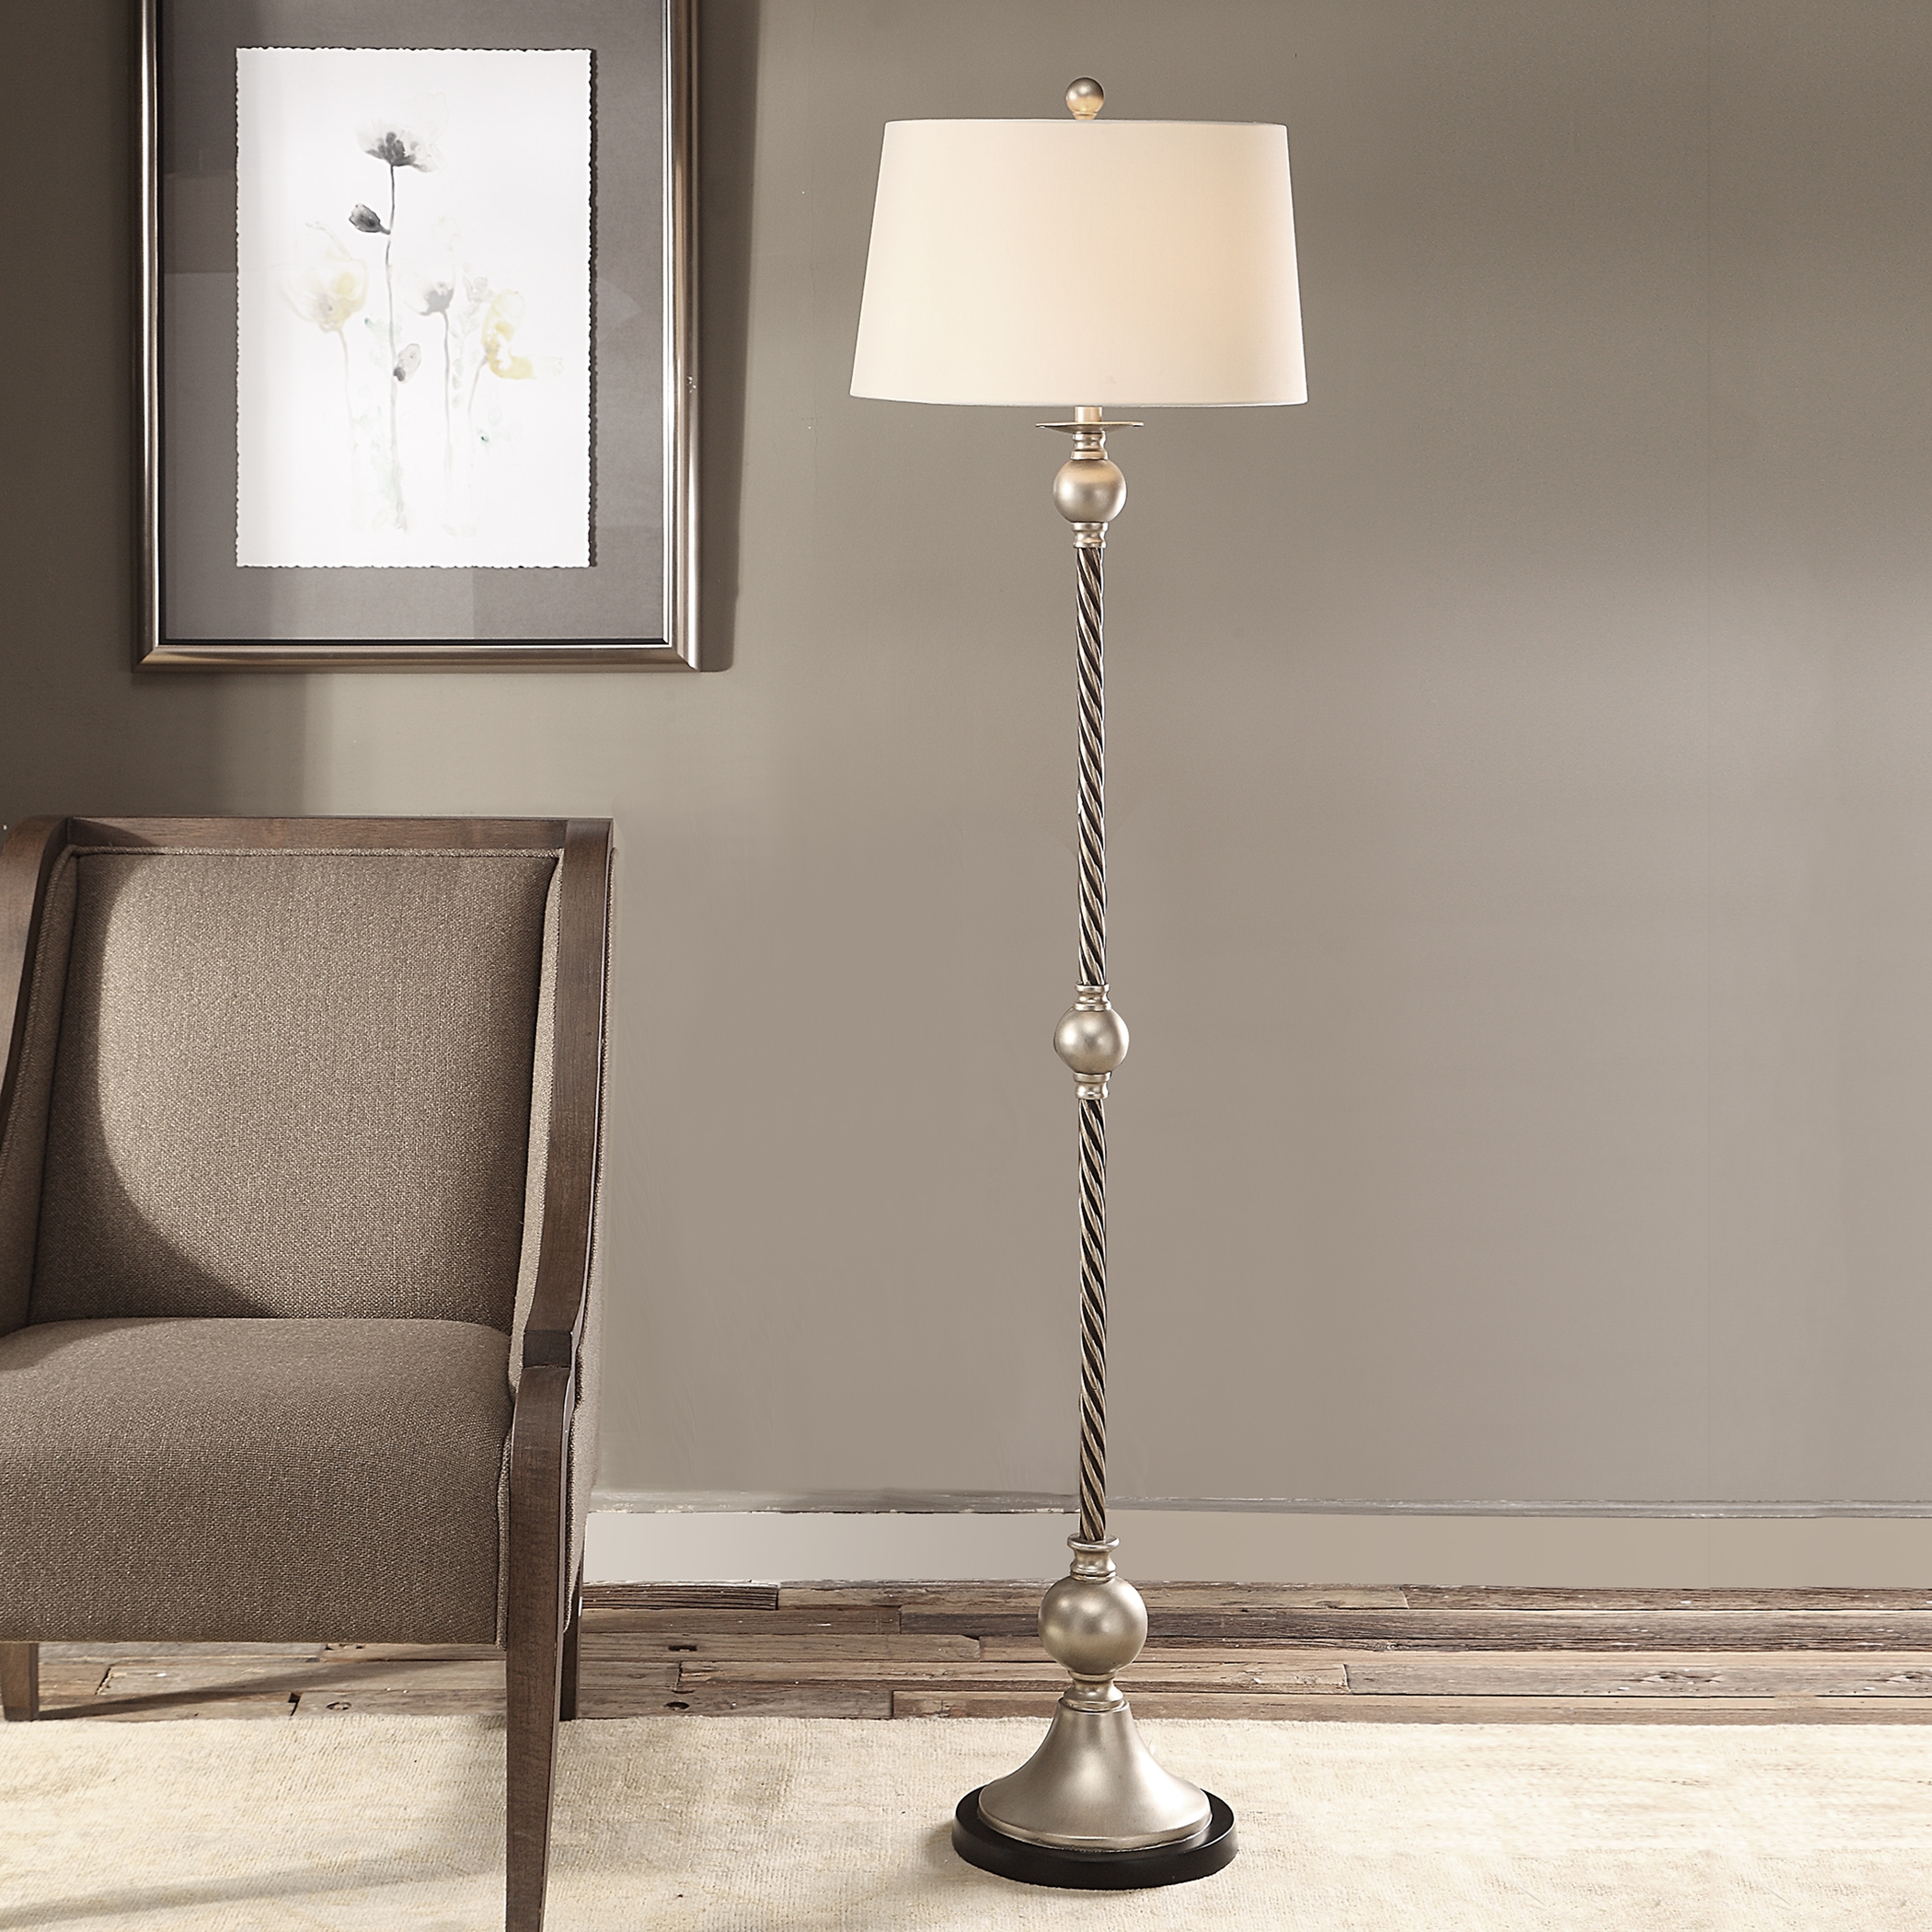 FLOOR LAMP - Image 0